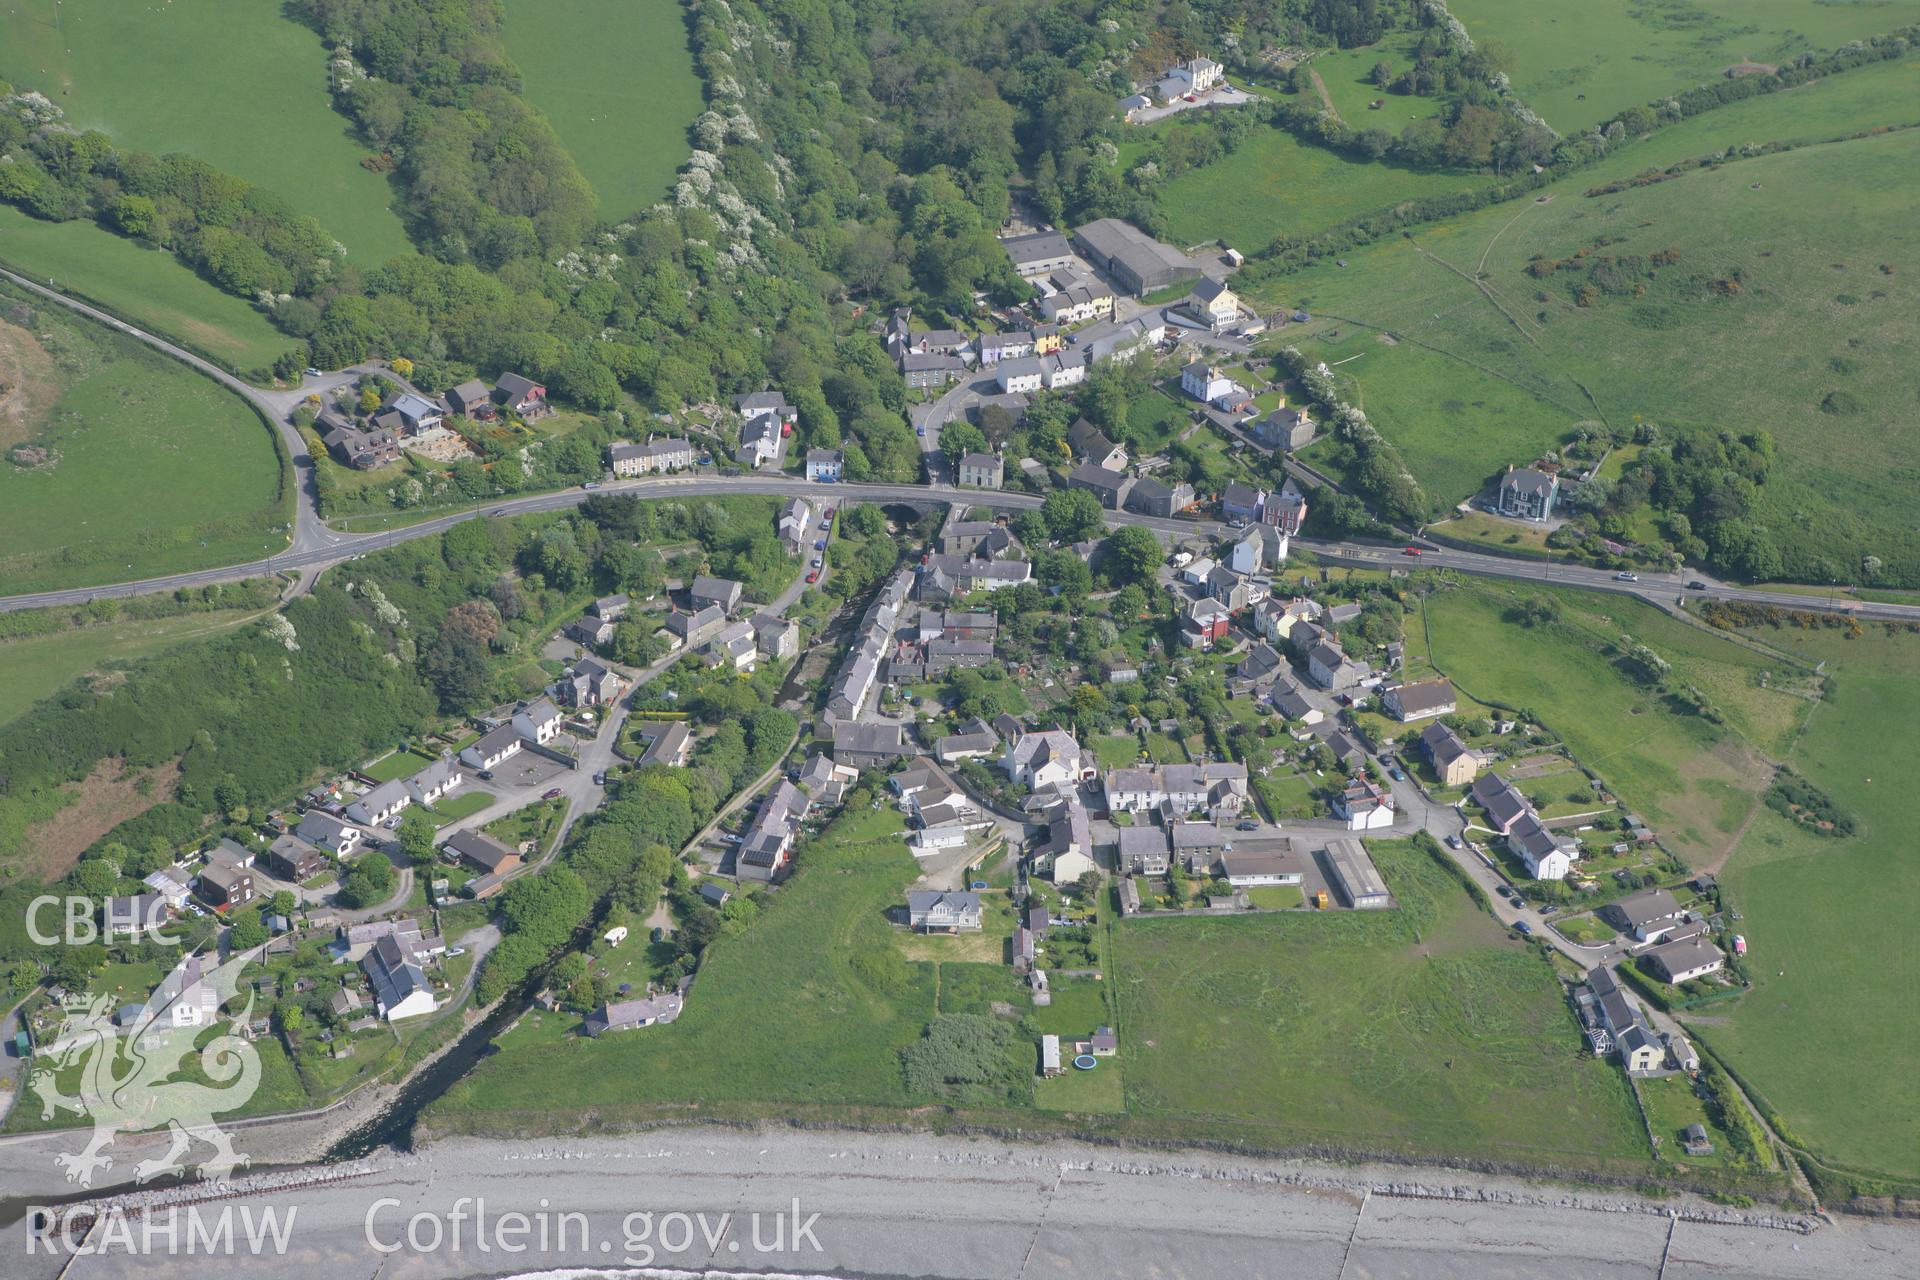 RCAHMW colour oblique photograph of Aberarth village. Taken by Toby Driver on 25/05/2010.